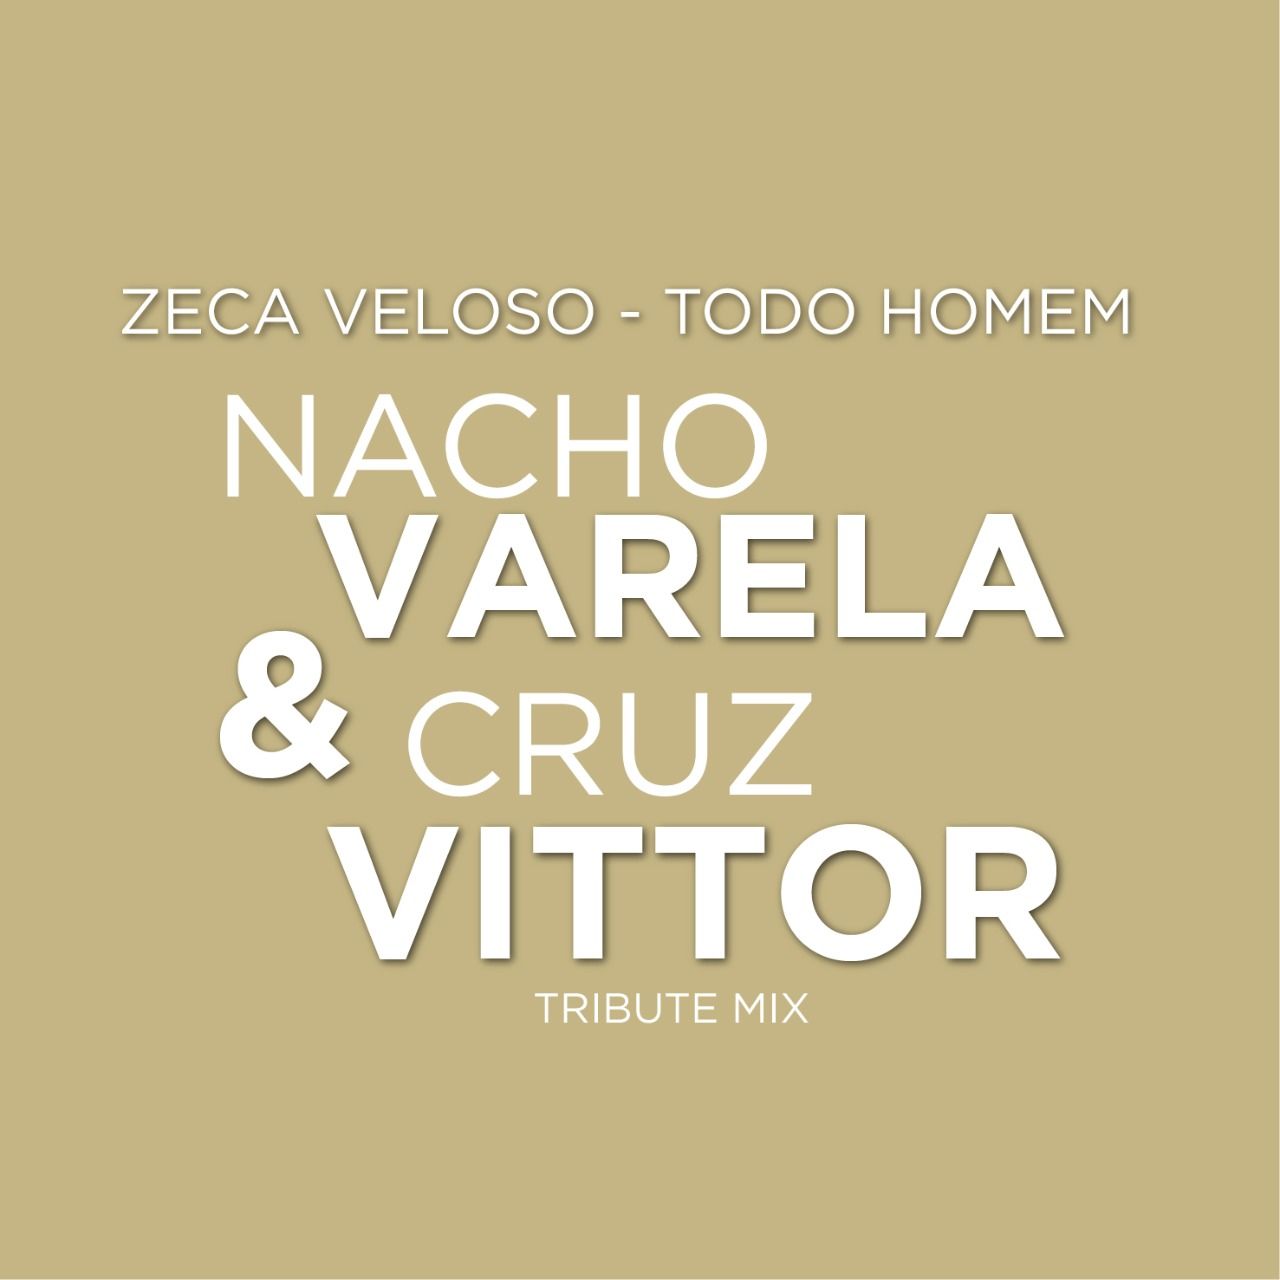 Tải xuống Zeca Veloso - Todo Homem (Nacho Varela & Cruz Vittor Tribute Mix) [Free Download]